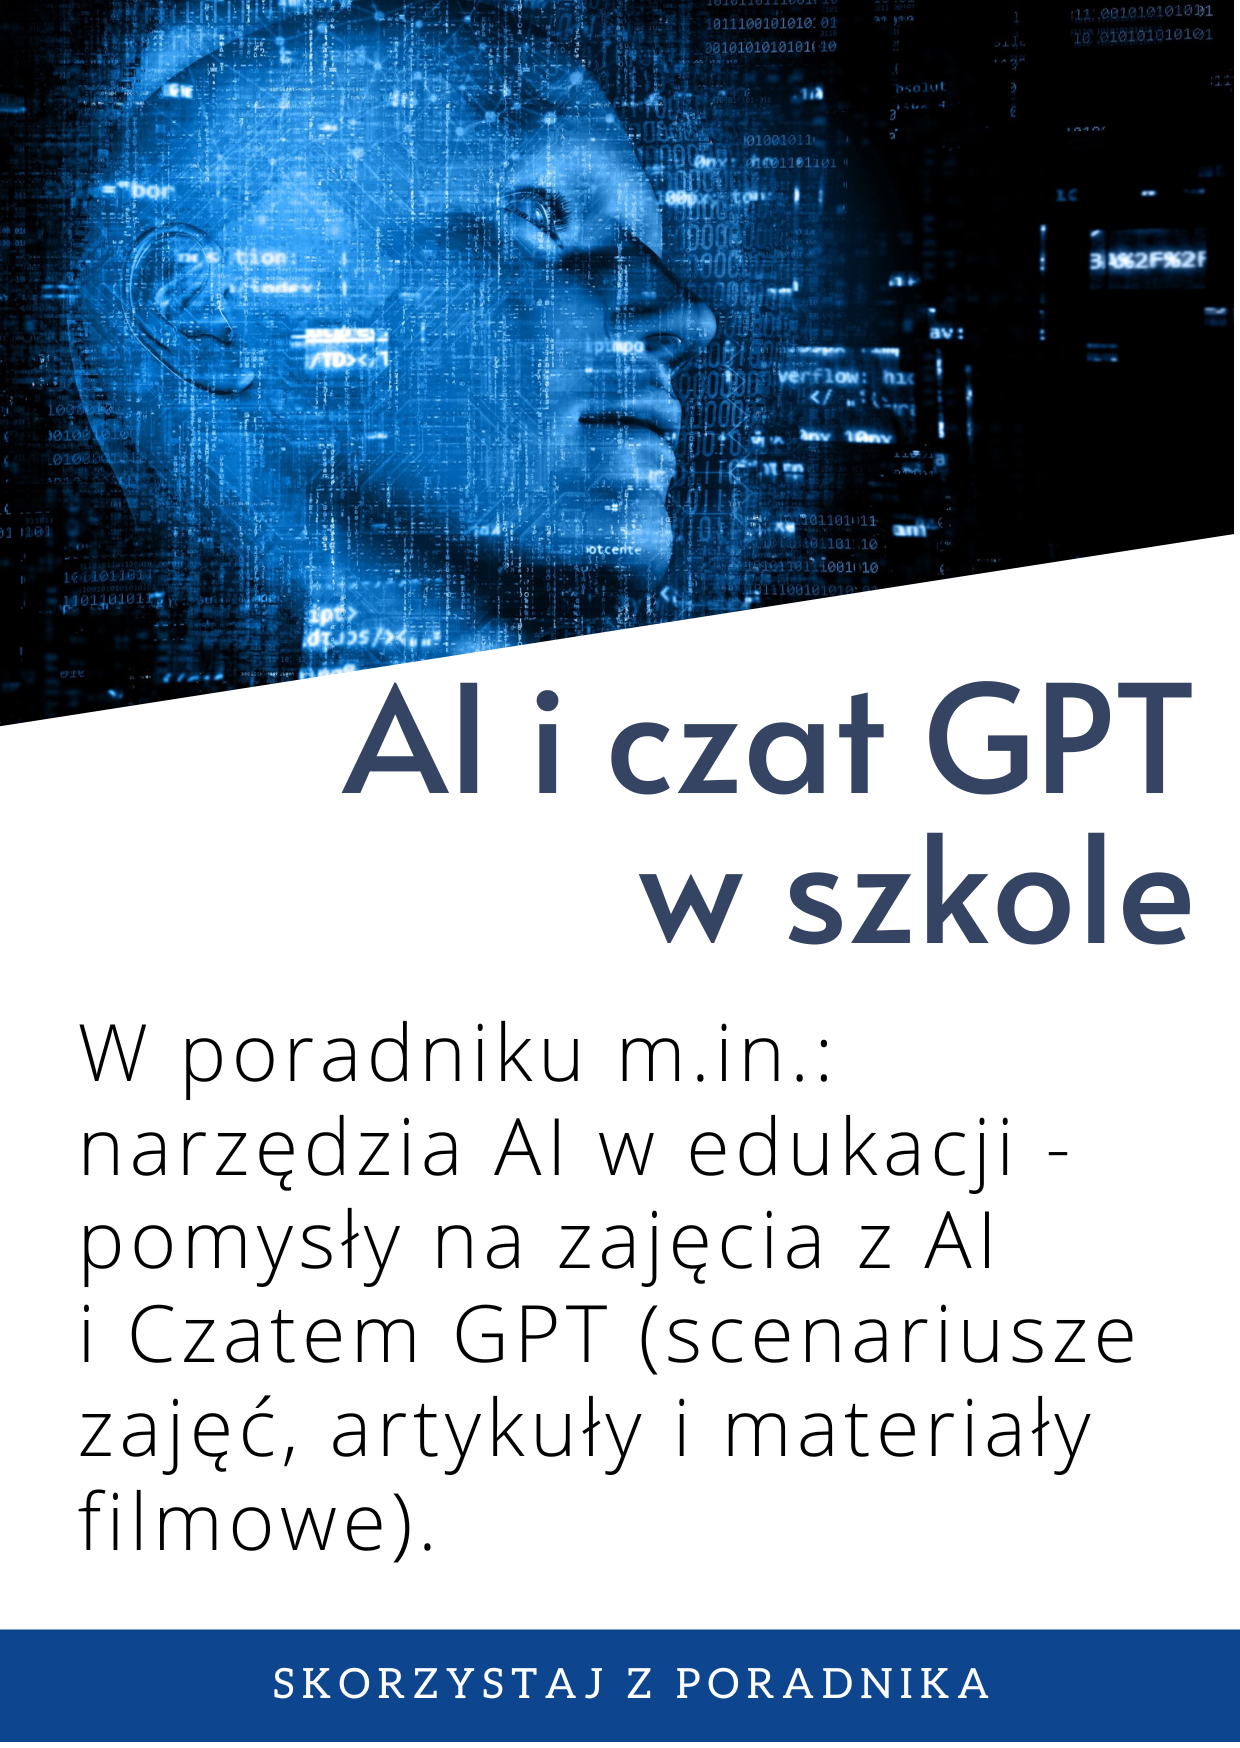 AI oraz Chat GPT w szkole